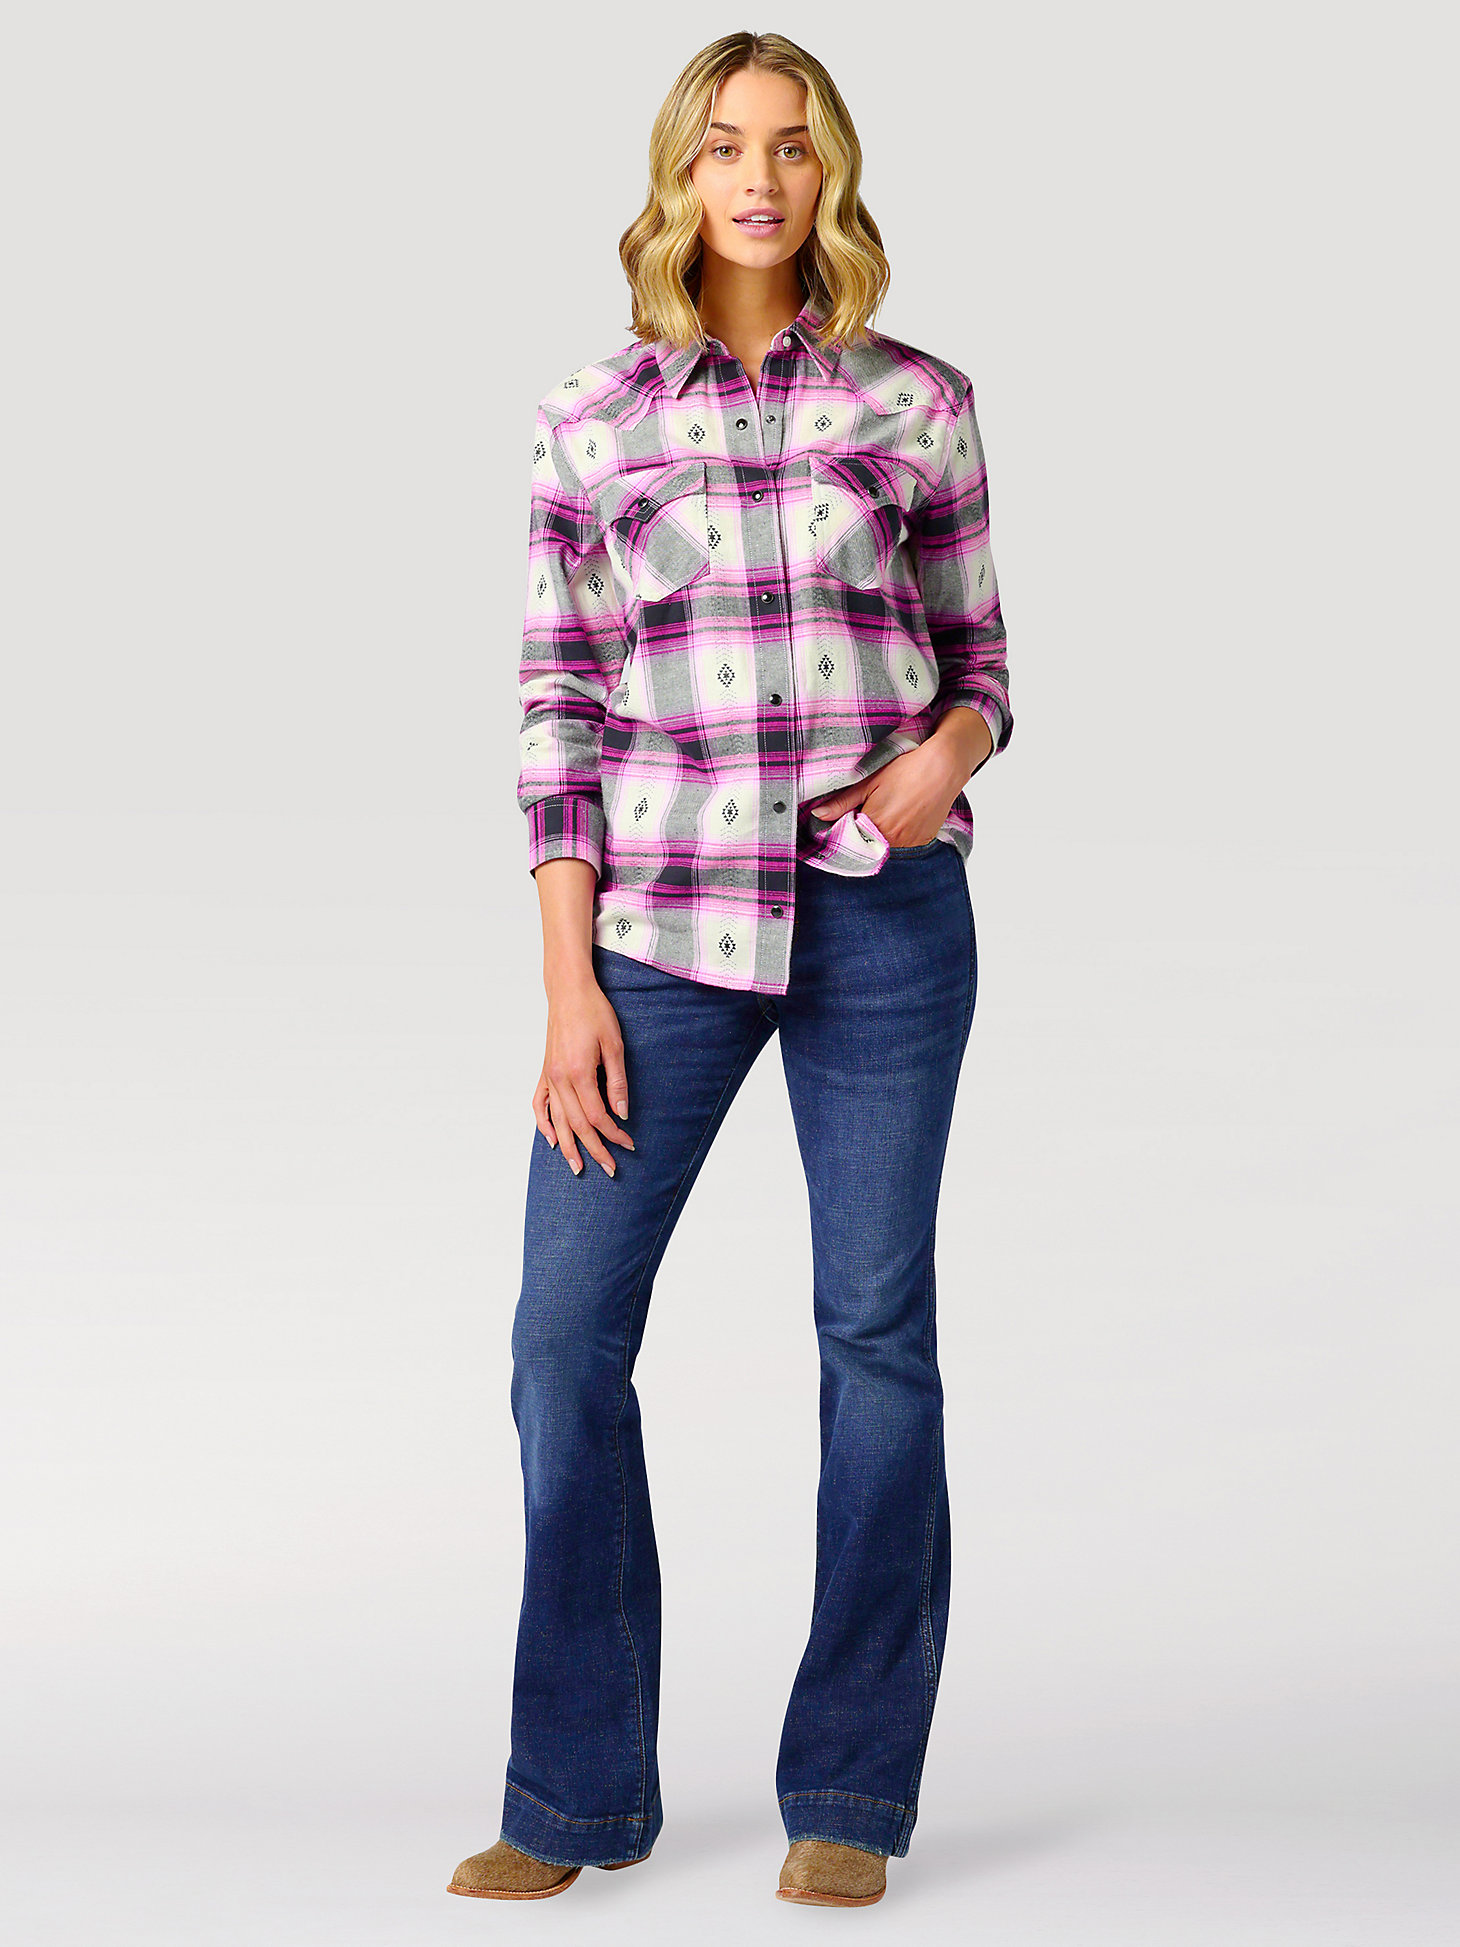 Women's Wrangler Retro® Long Sleeve Boyfriend Fit Flannel Plaid Shirt in Wren alternative view 1